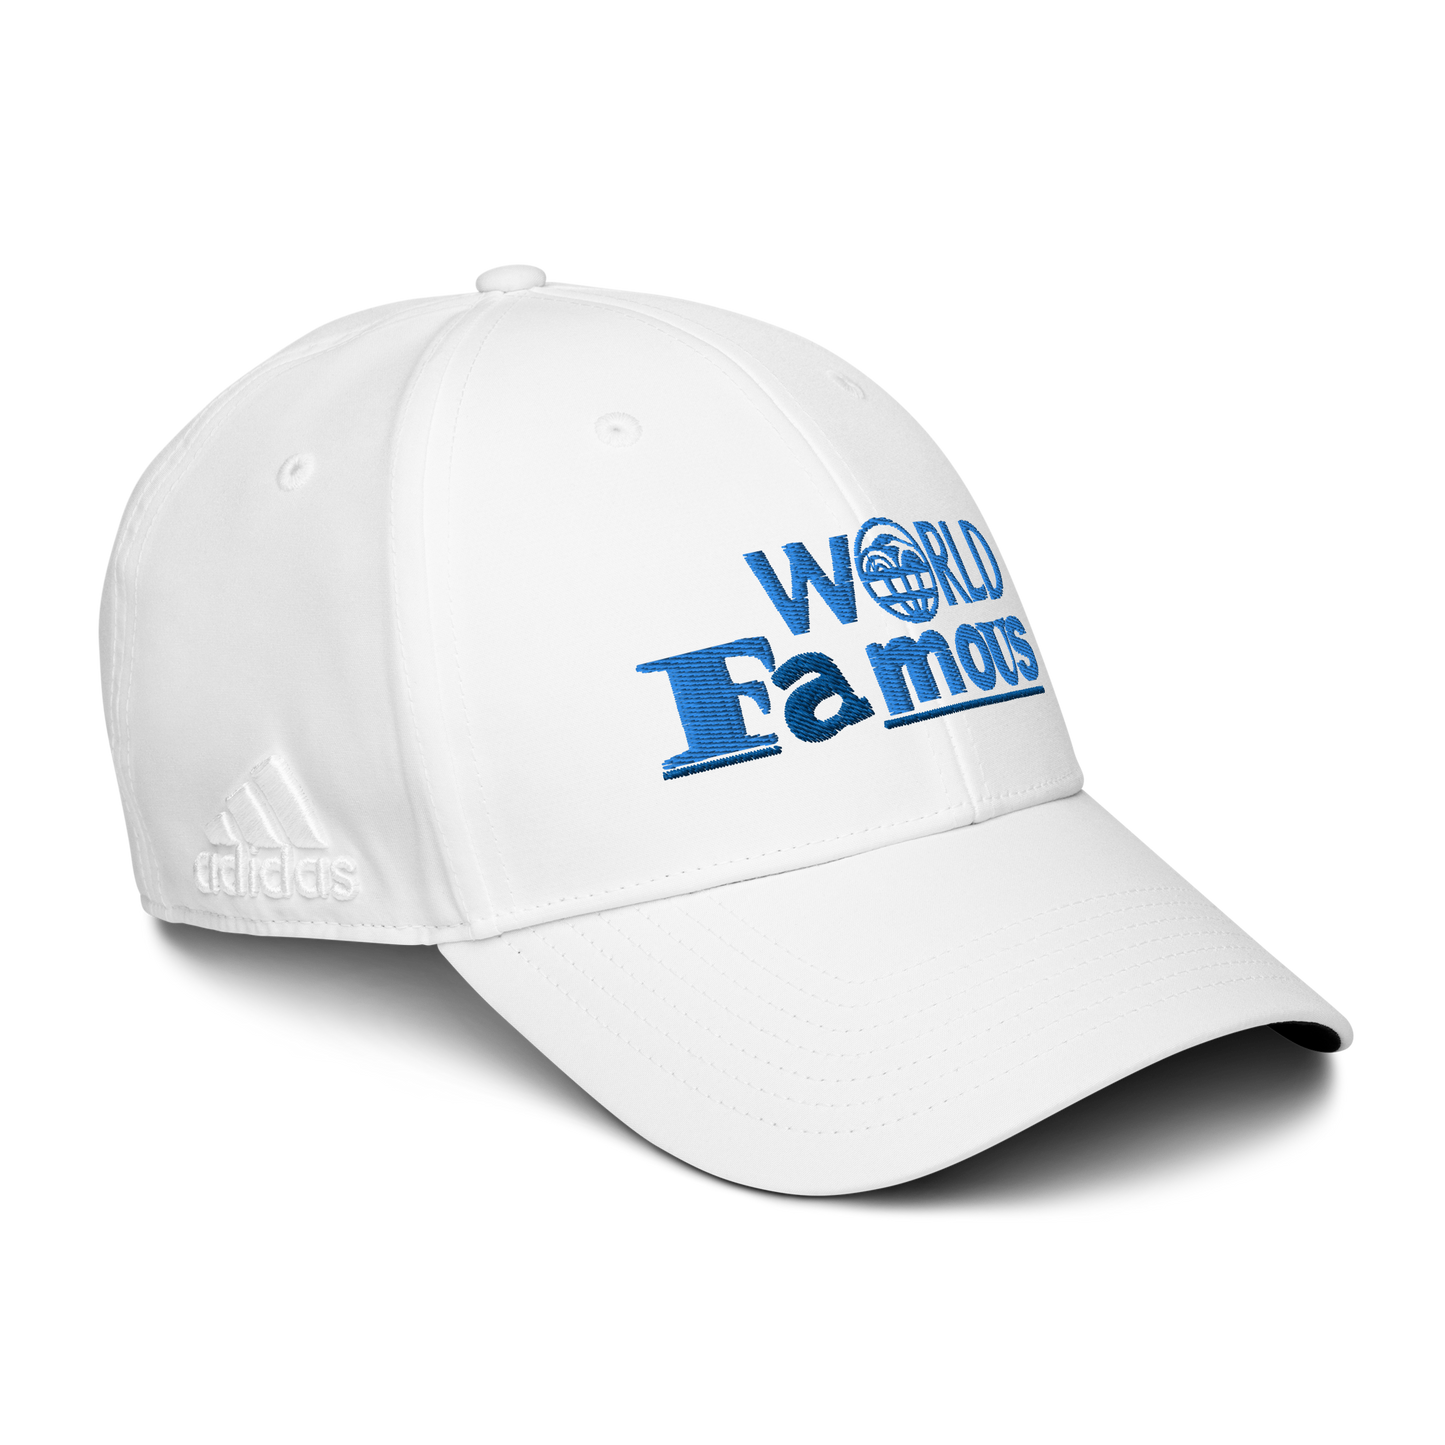 WORLD FAMOUS Adidas Dad Hat